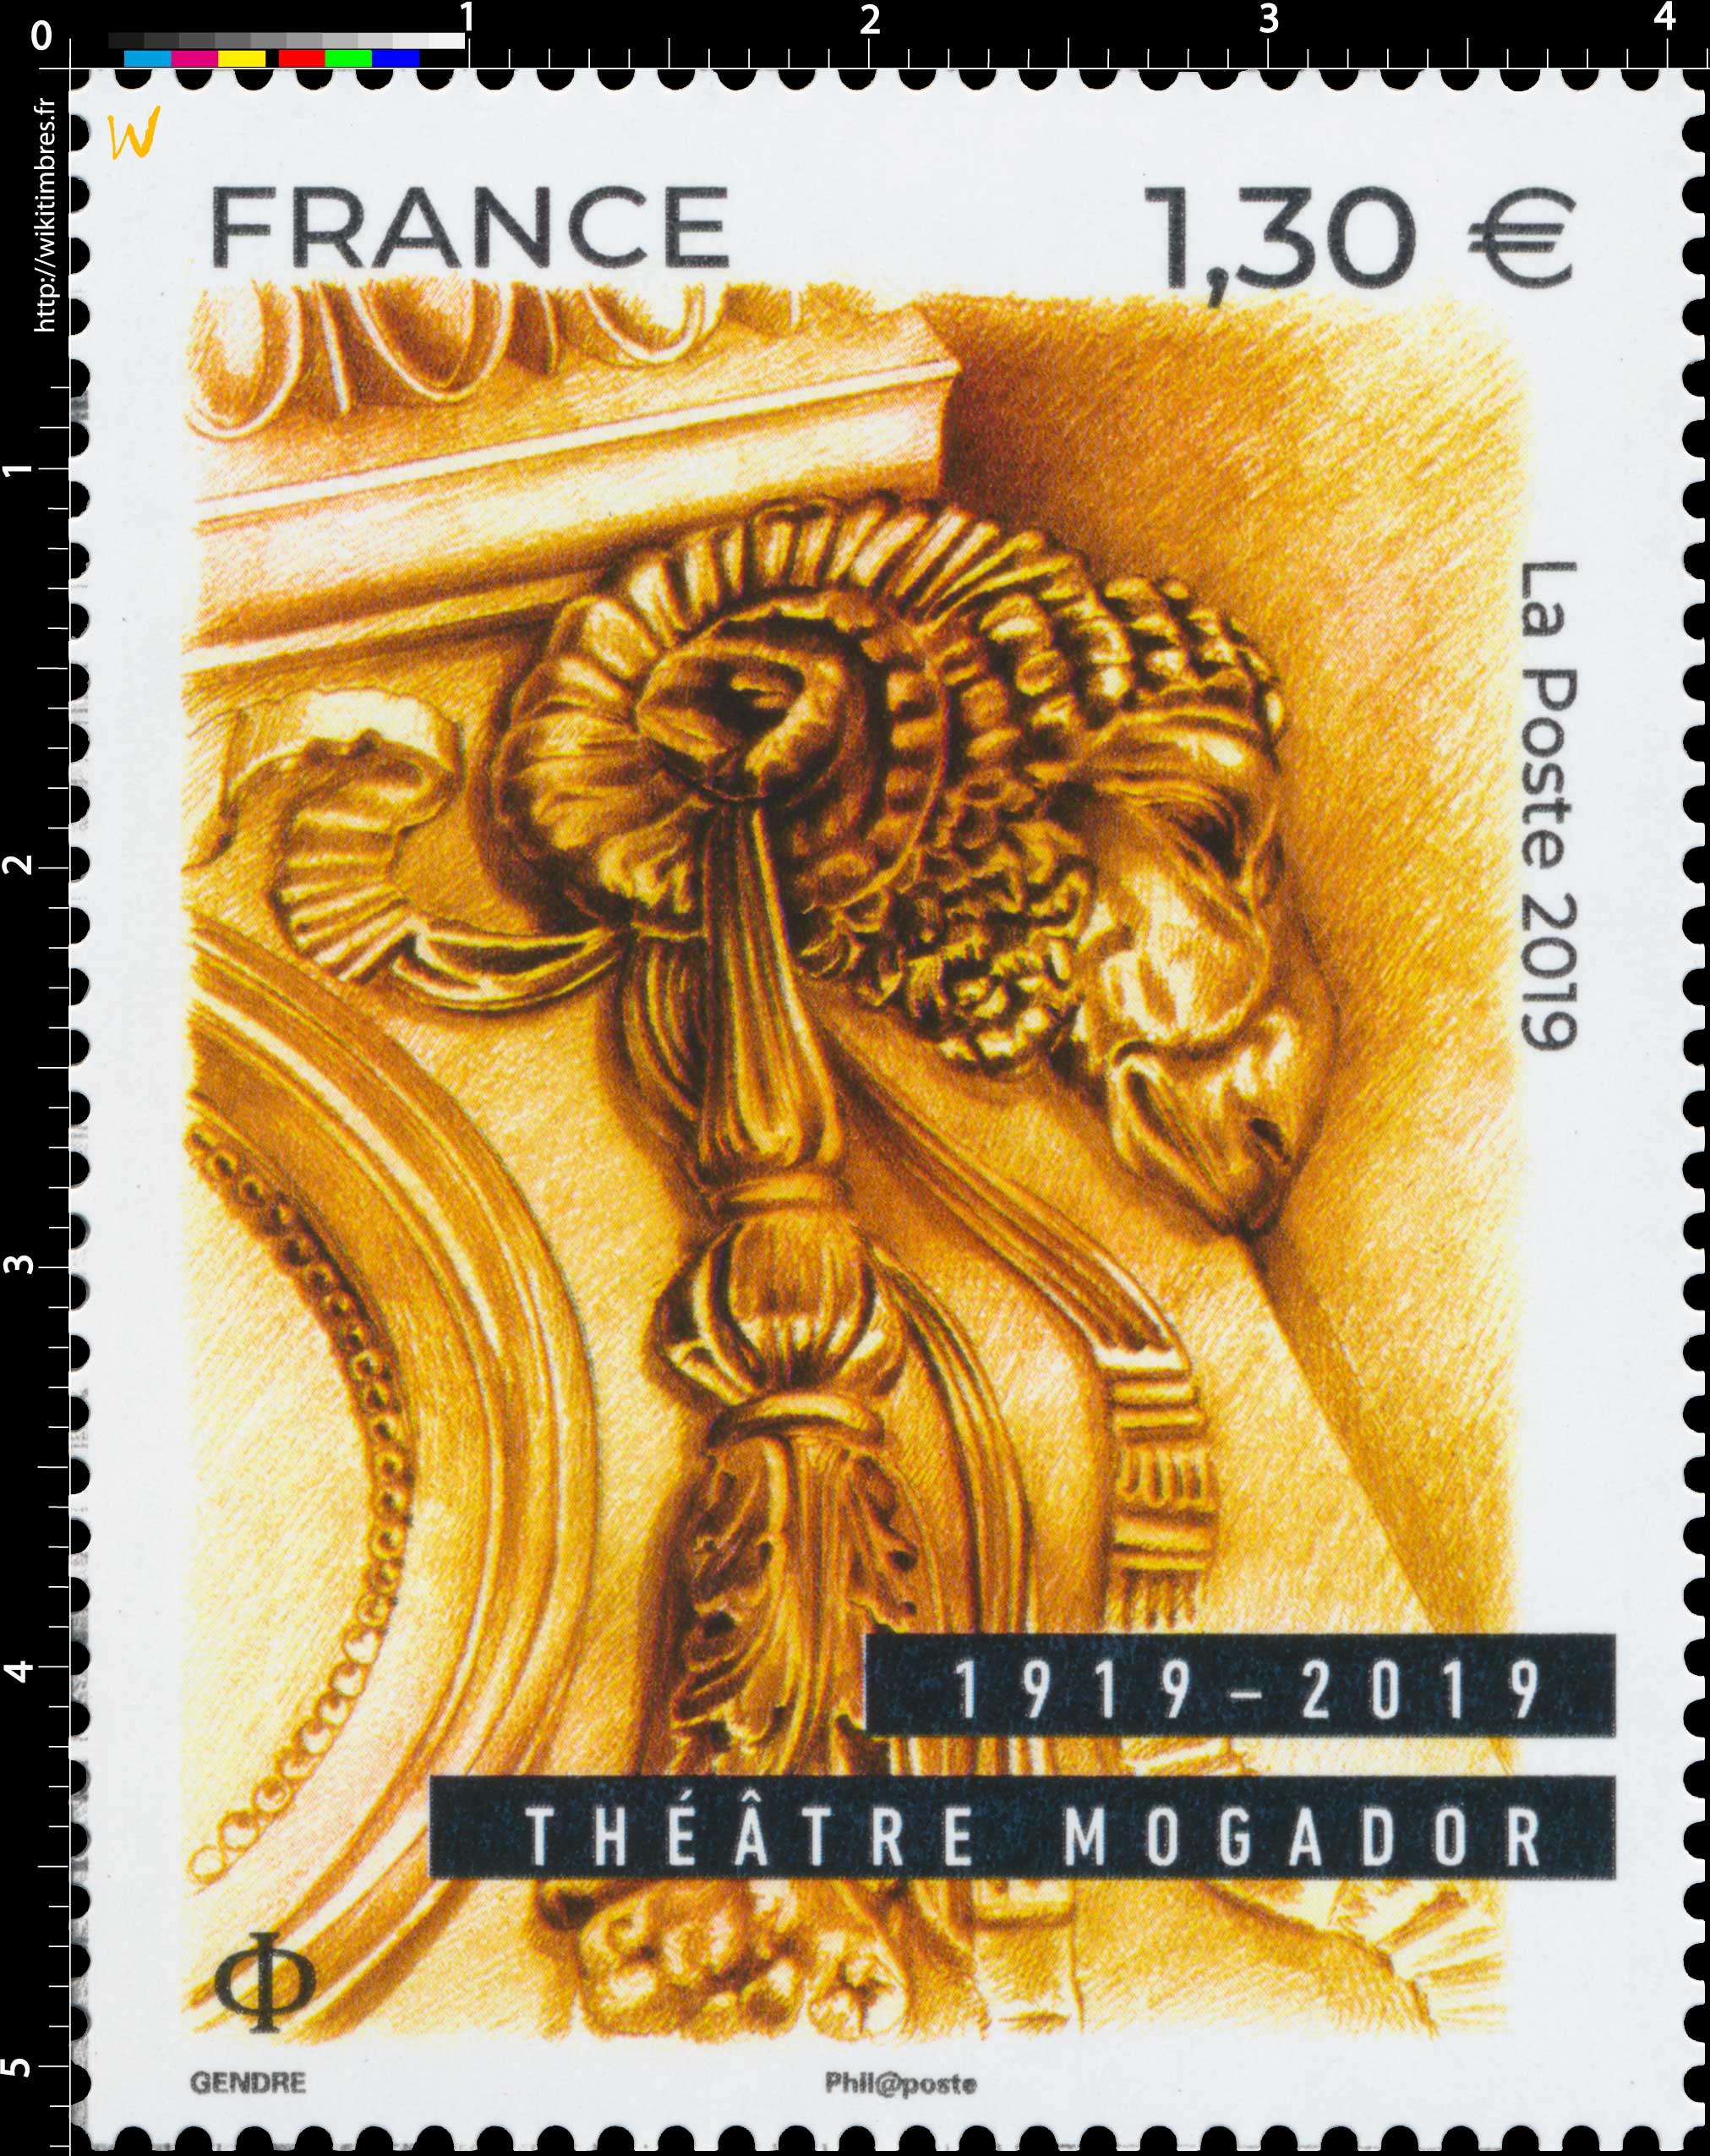 1919 - 2019 THÉÂTRE MOGADOR